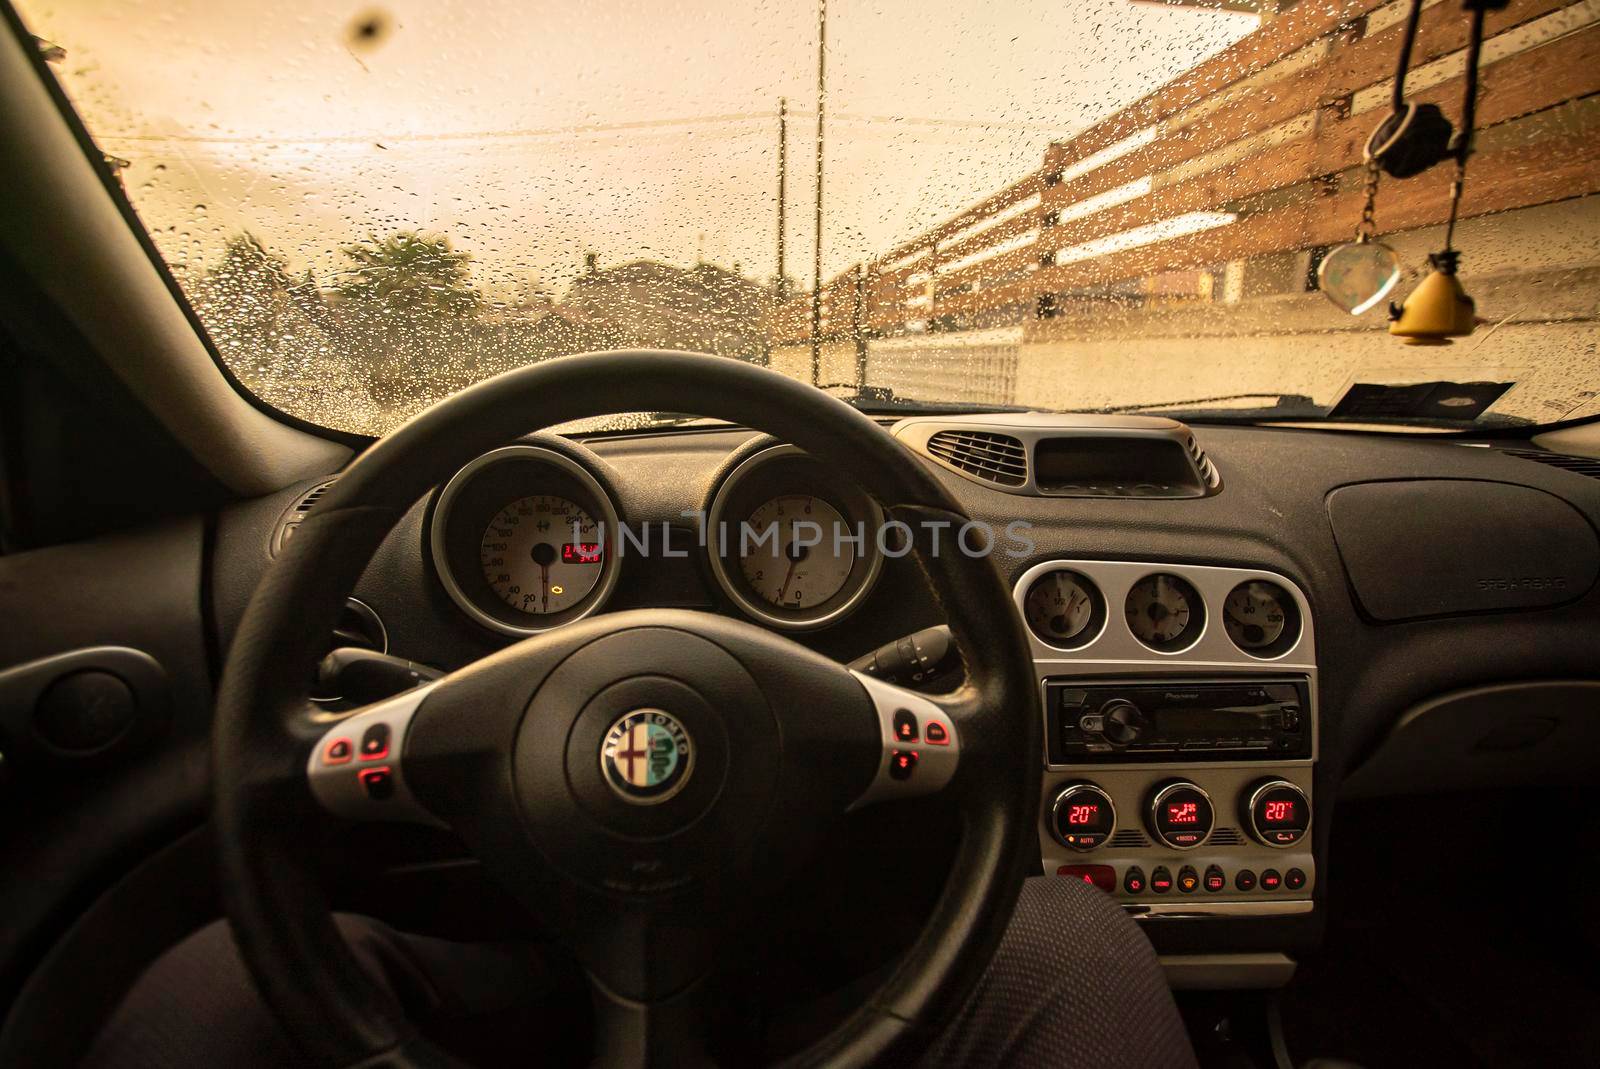 MILAN, ITALY 17 FEBRUARY 2021: Car dashboard interior detail